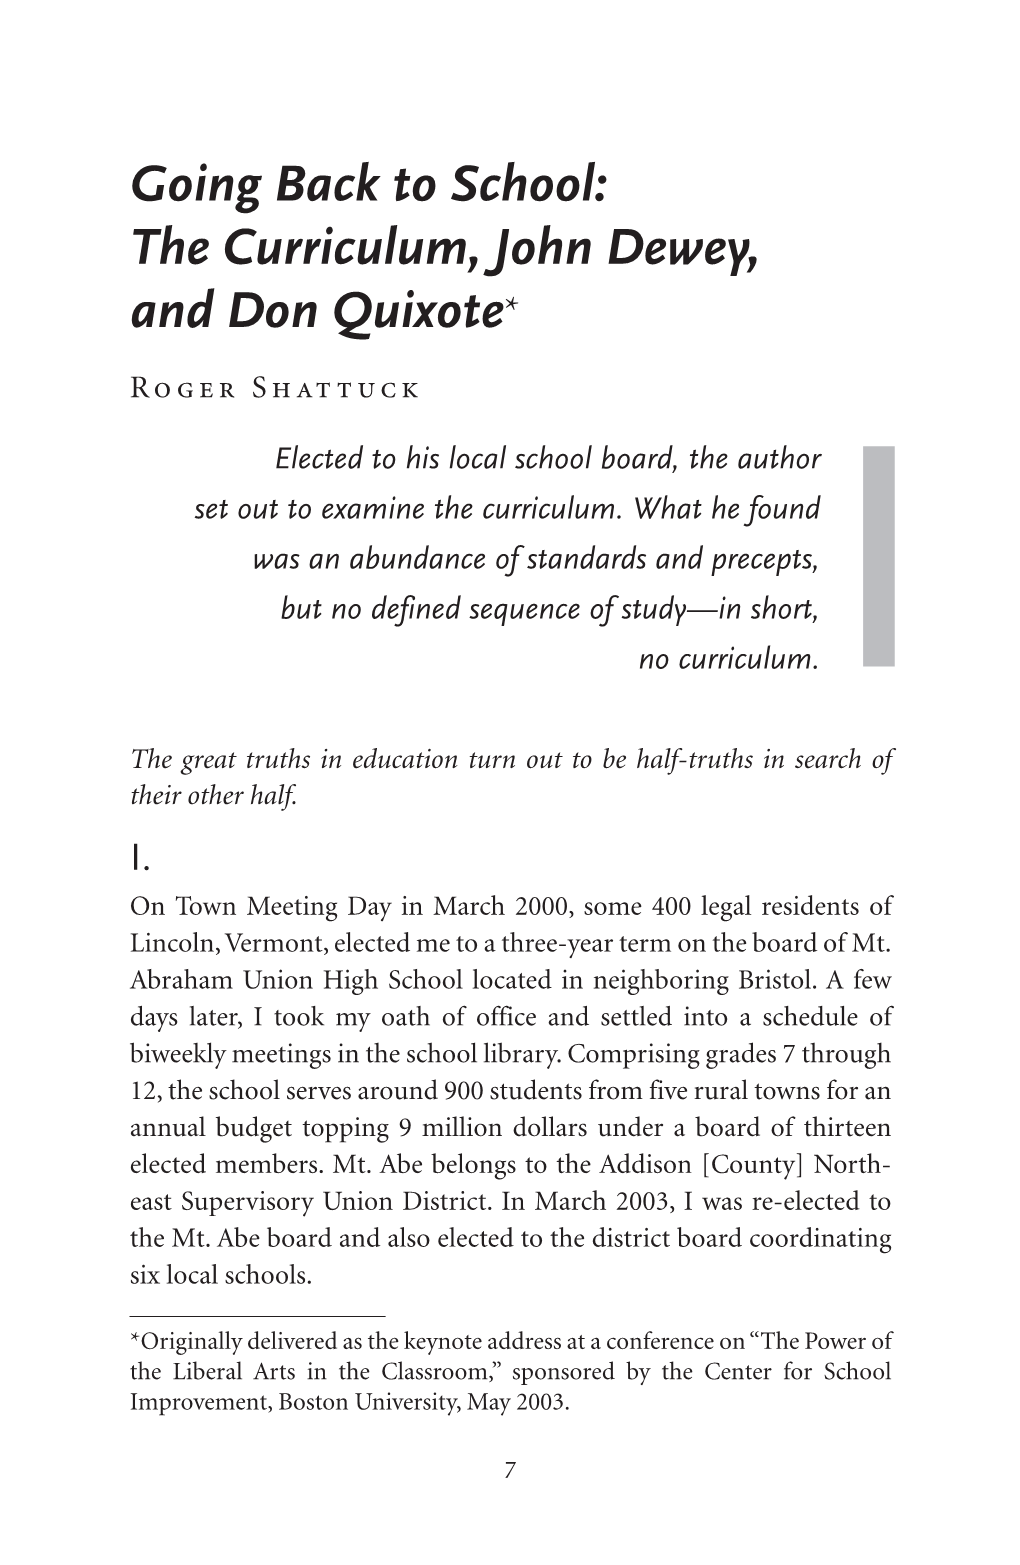 The Curriculum, John Dewey, and Don Quixote *